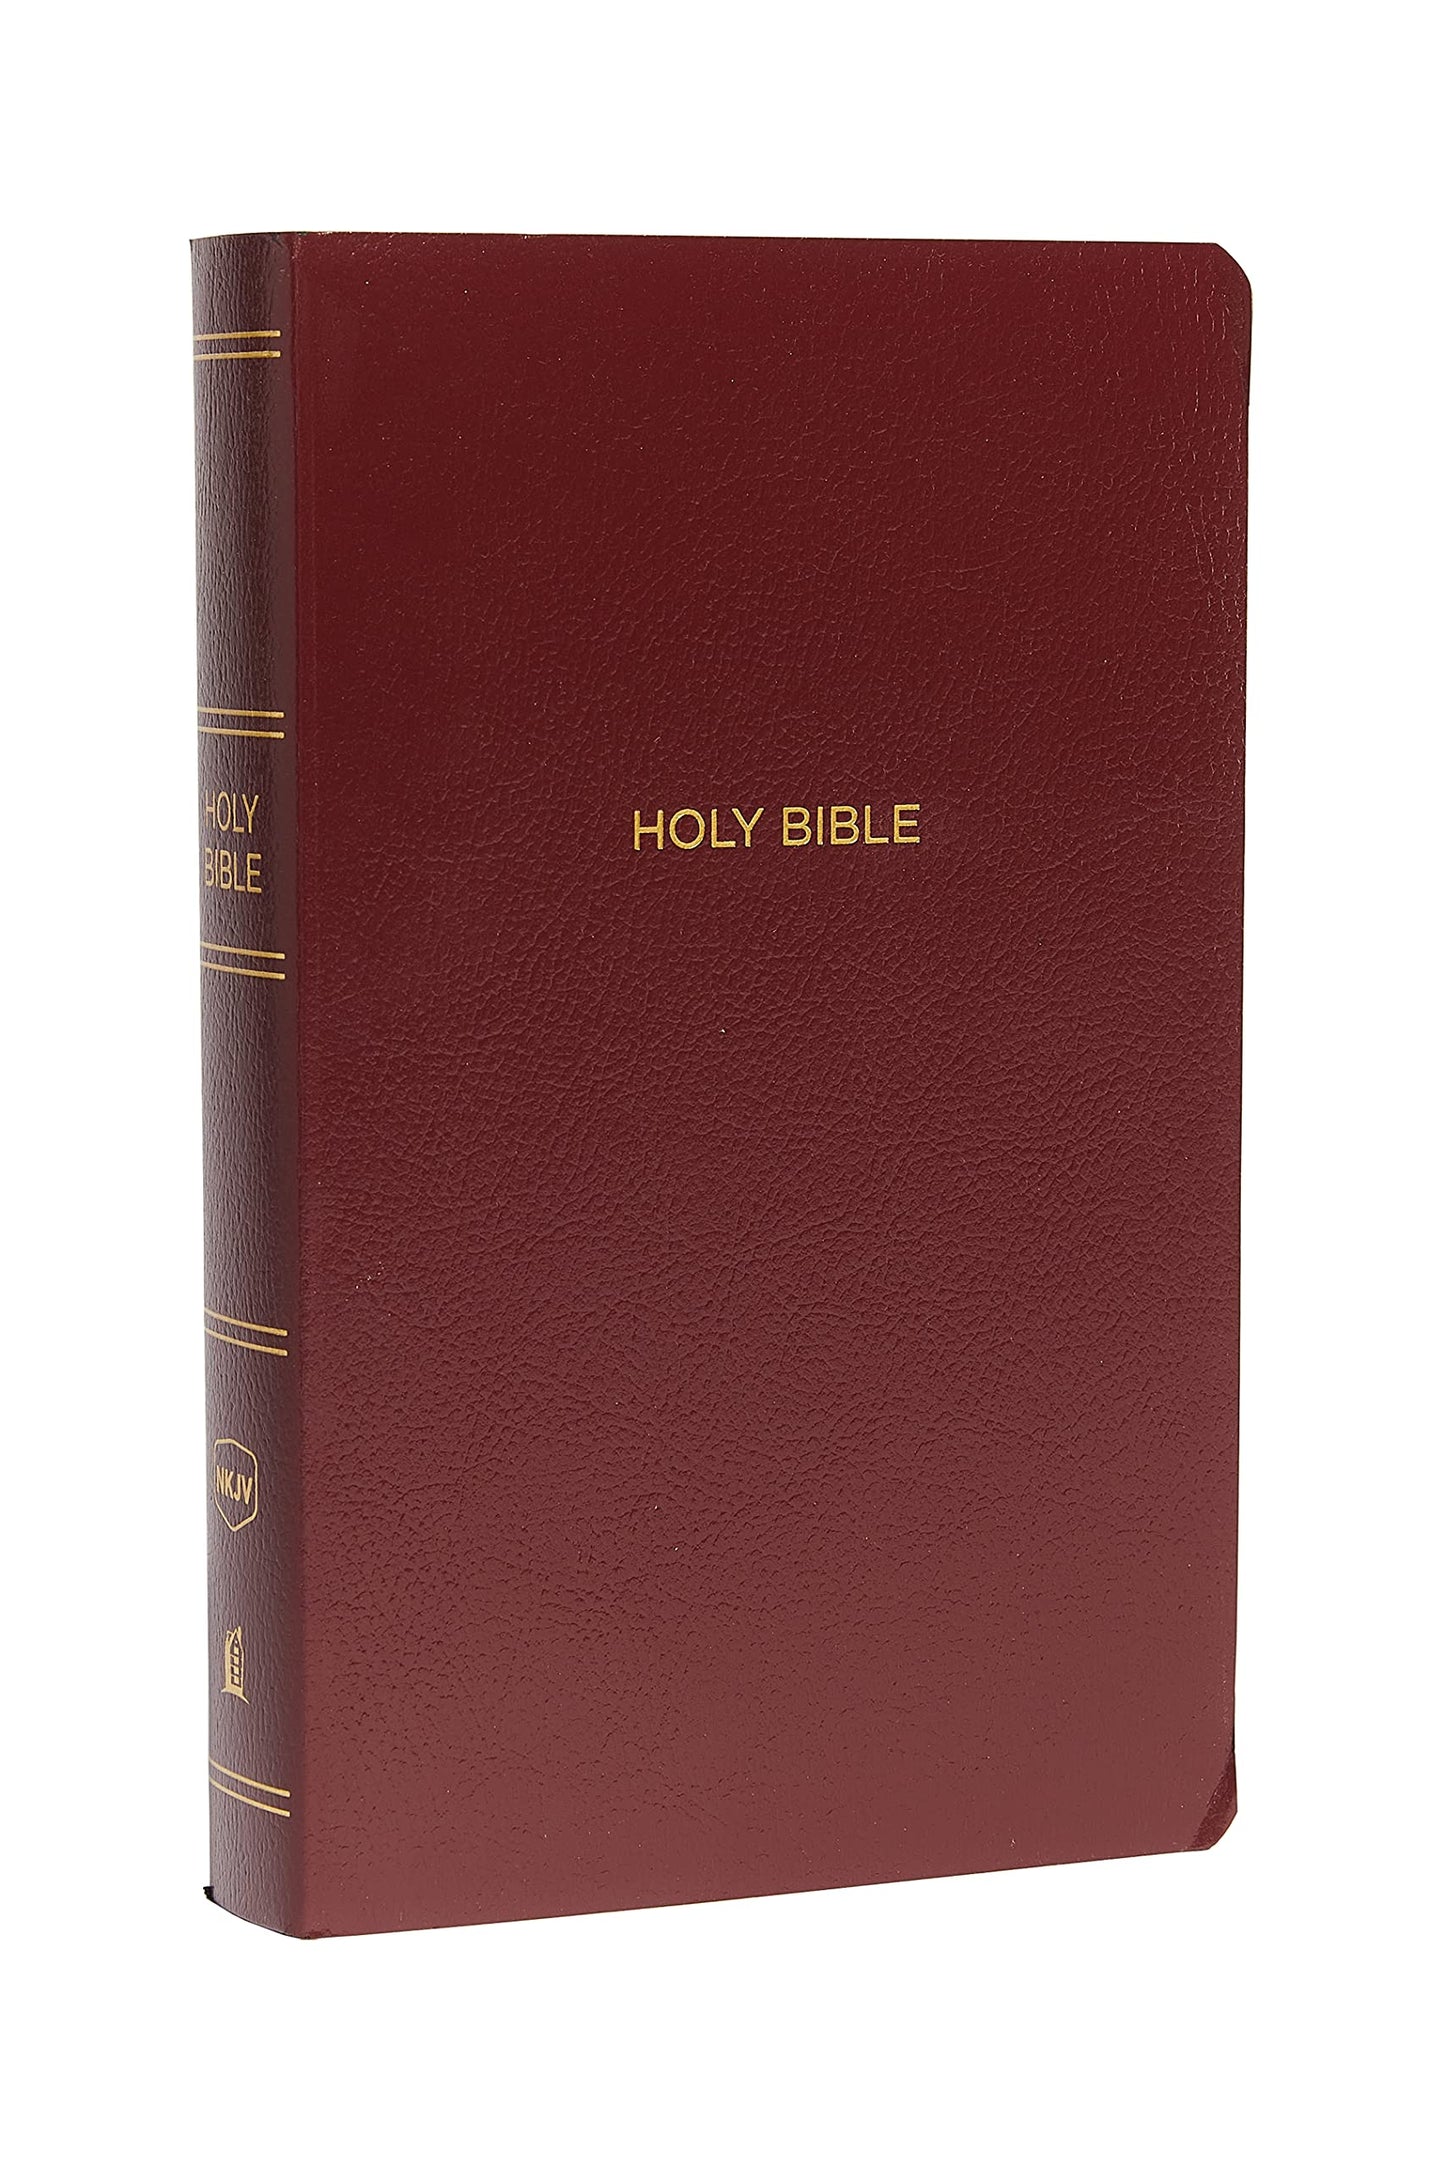 NKJV, Gift and Award Bible, Burgundy, Imitation-Leather